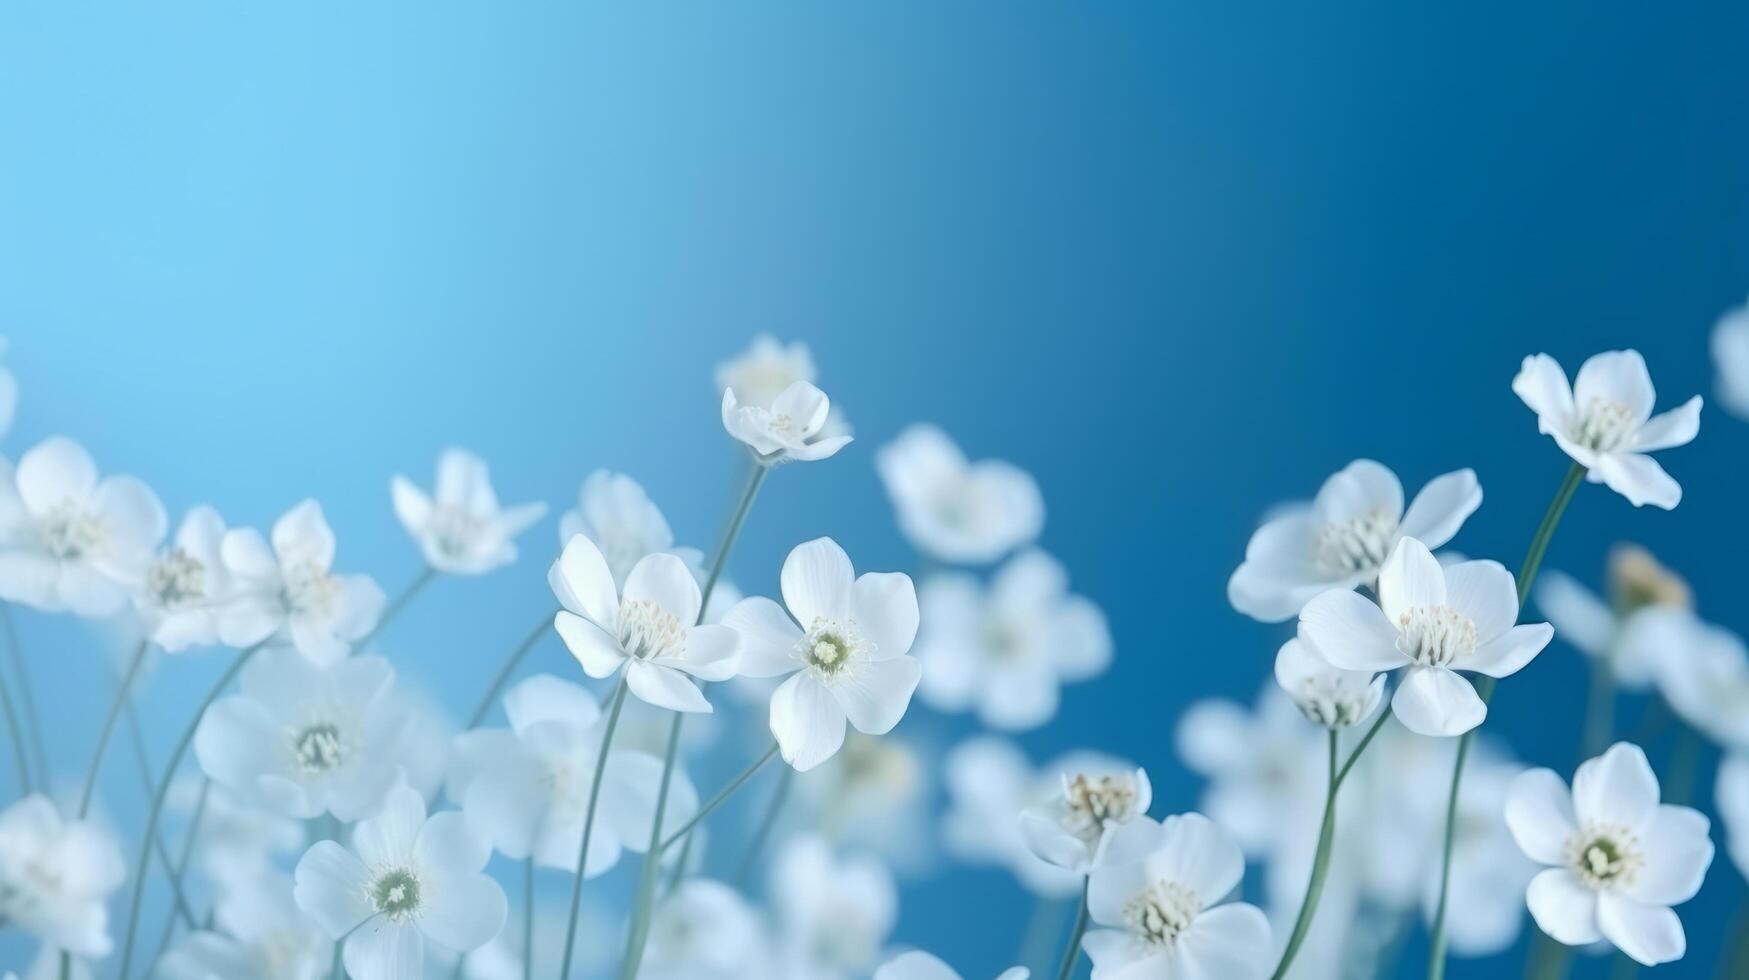 White spring flowers on blue background. Illustration photo